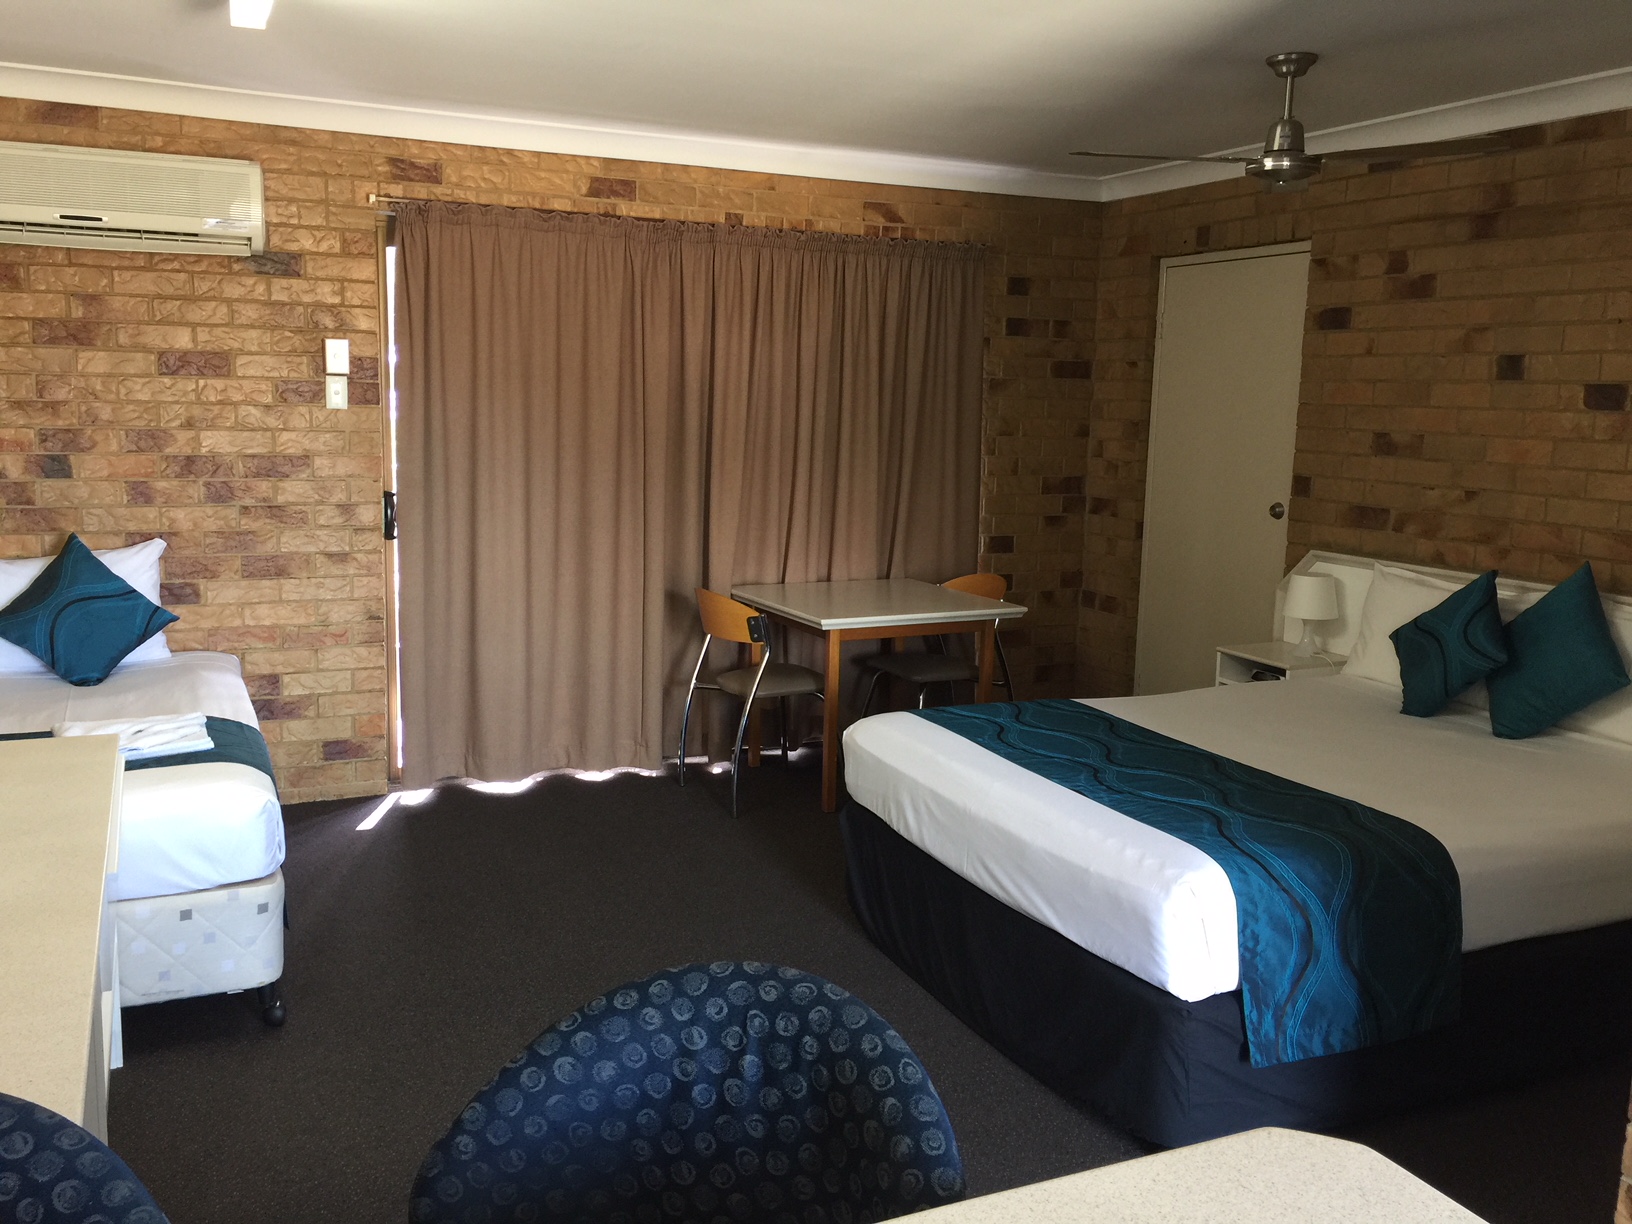 Motel Room Facilities at Bribie Island Waterways Motel